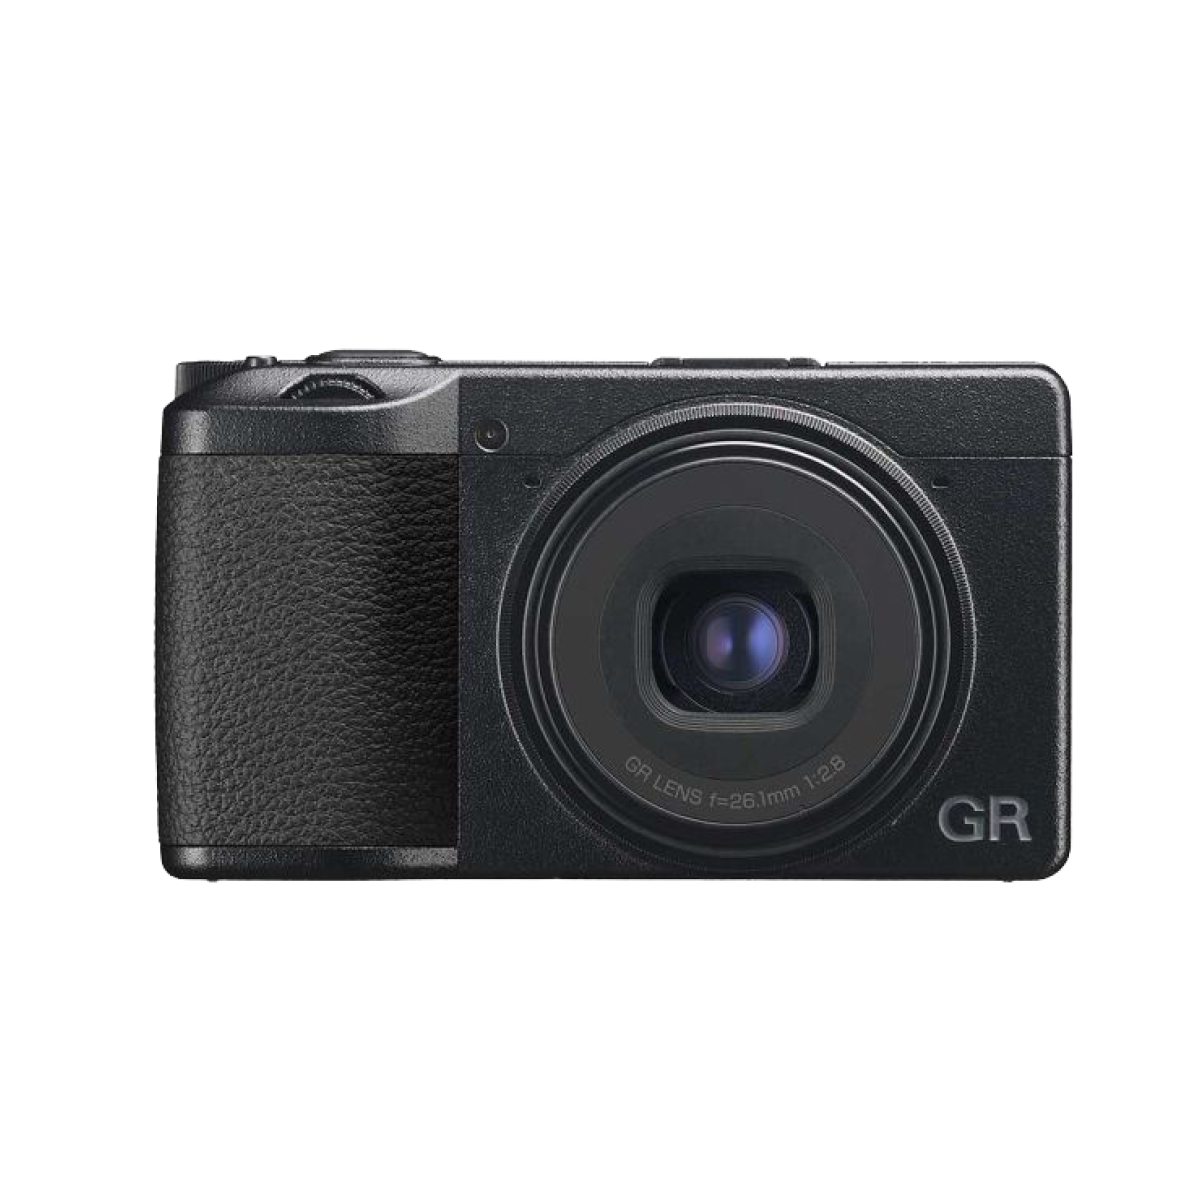 A pocketable Ricoh GR IIIx camera in black